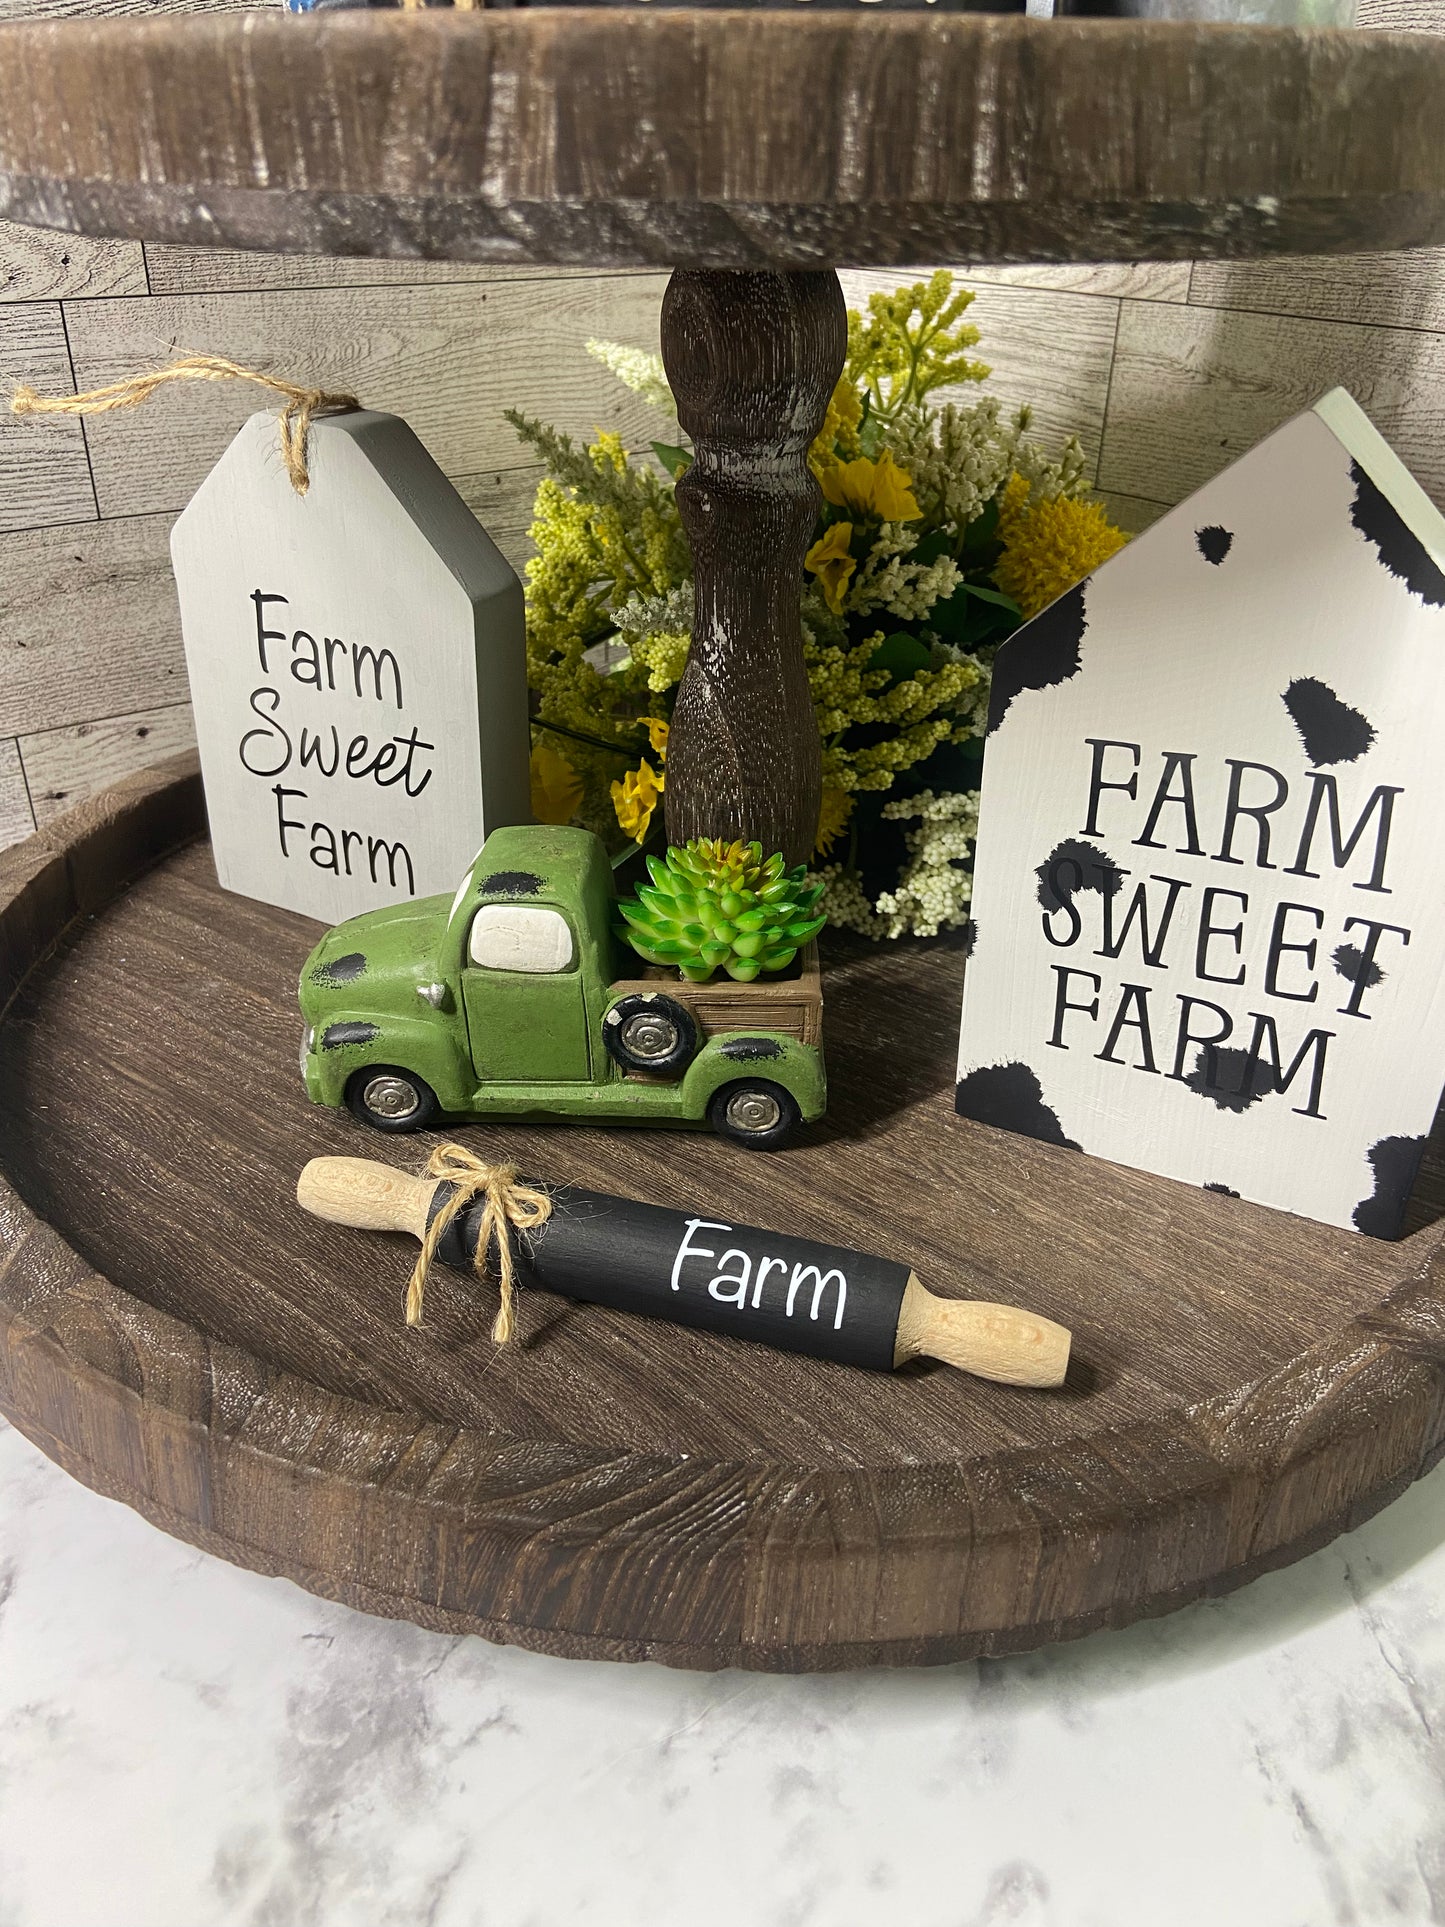 Farm Sweet Farm - Tag